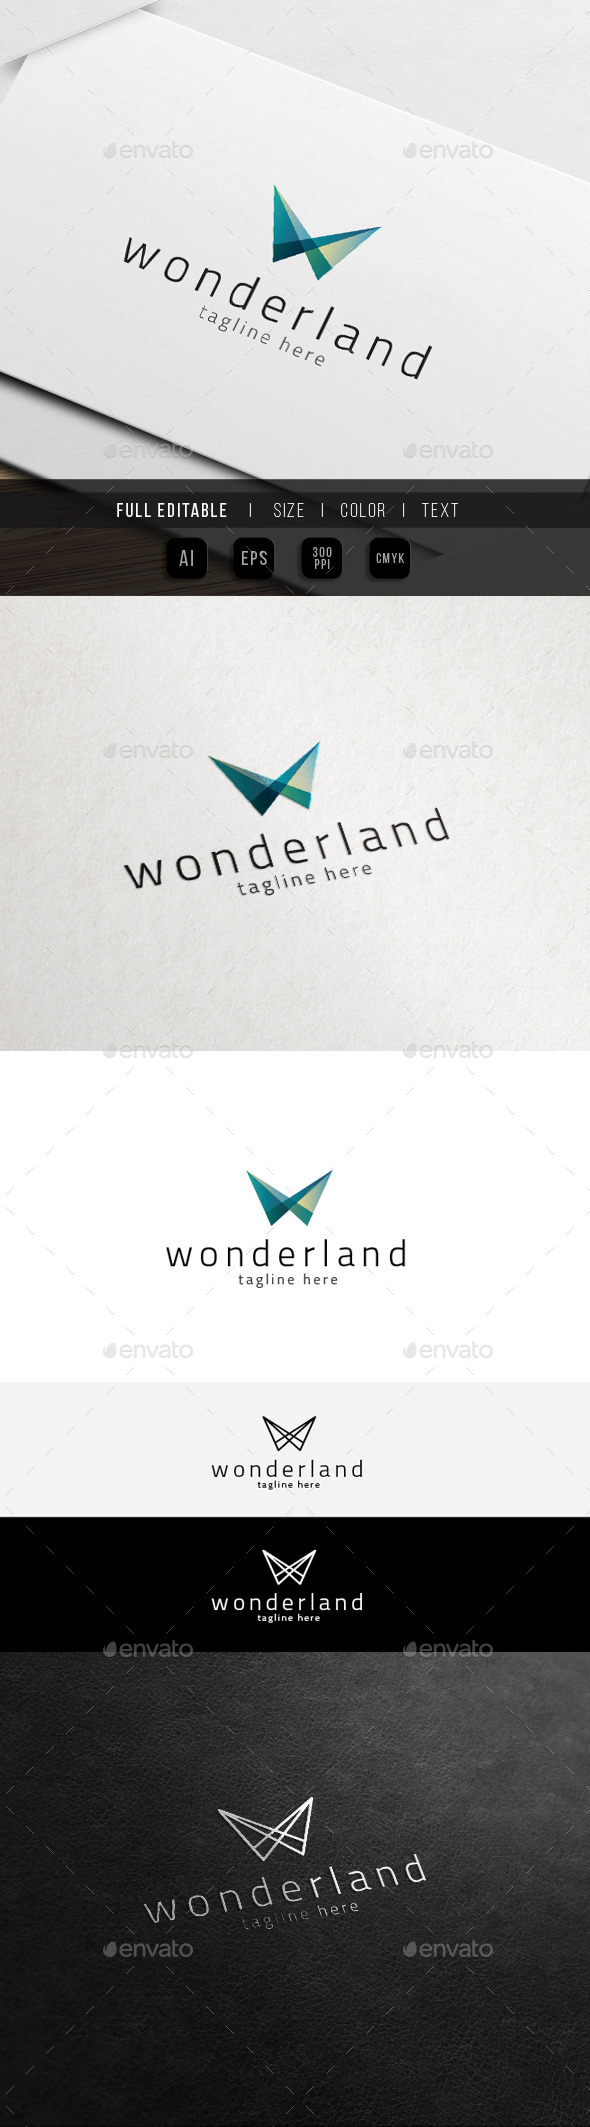 Wonderland Studio - Business Marketing Logo